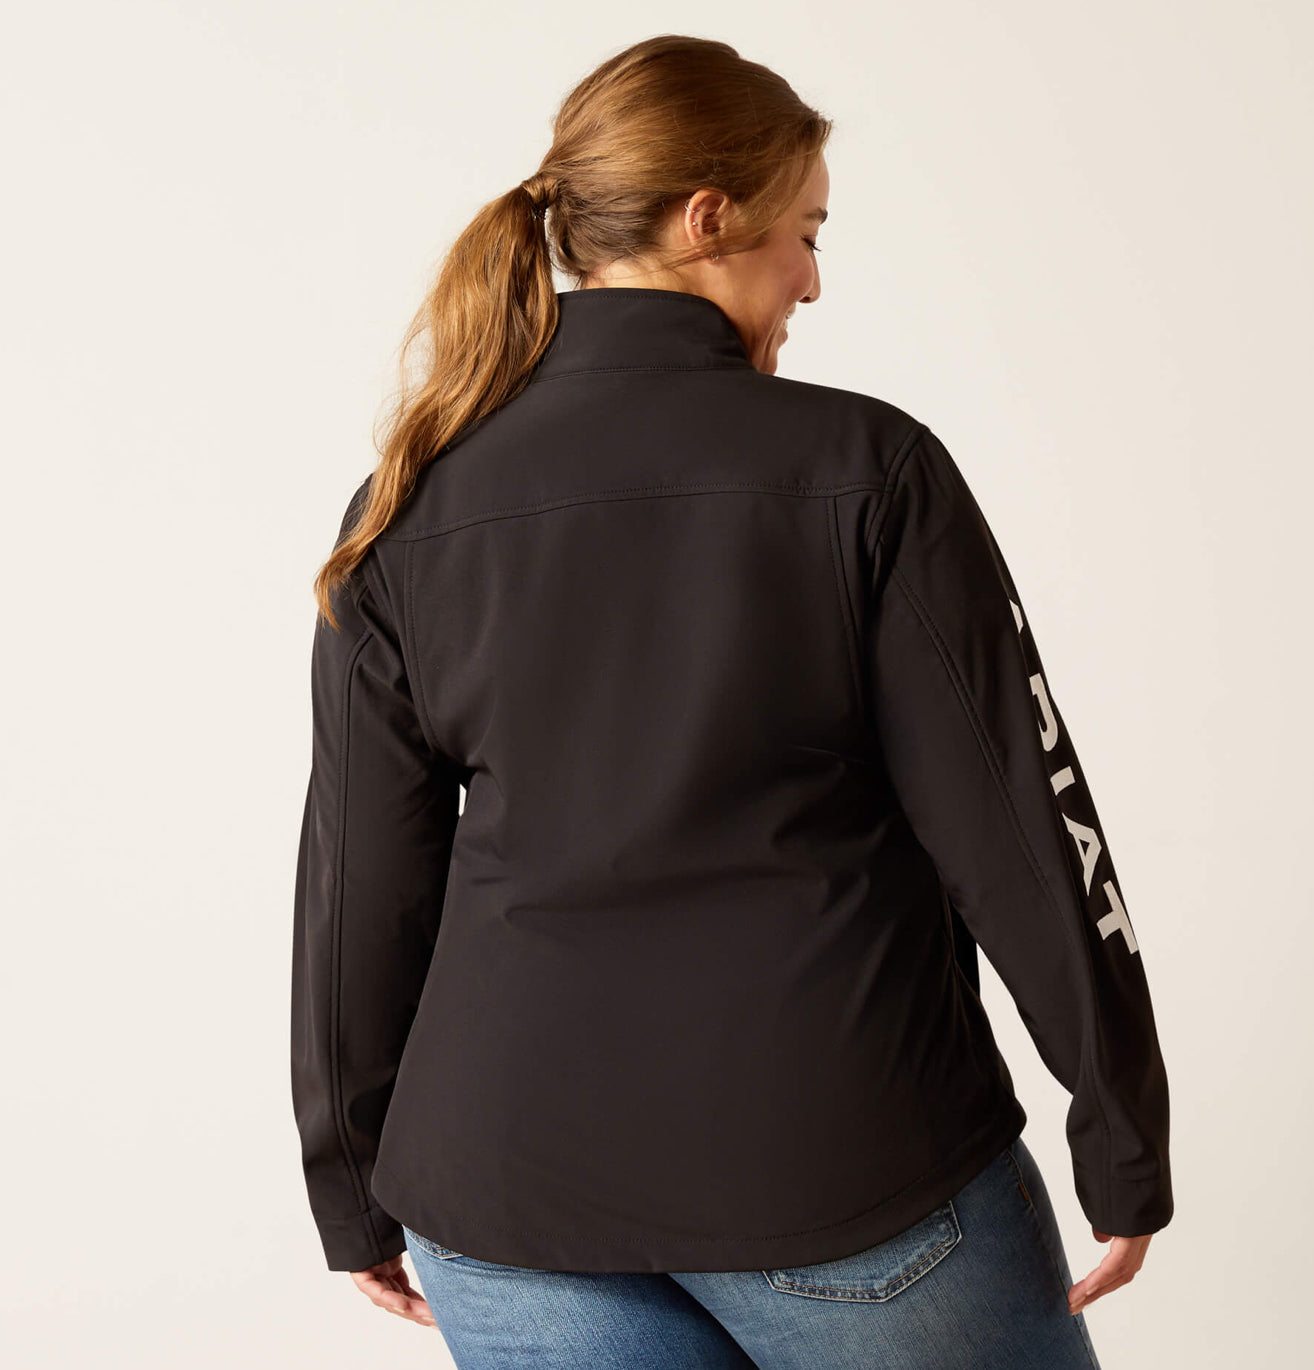 Women’s Ariat New Team softshell jacket